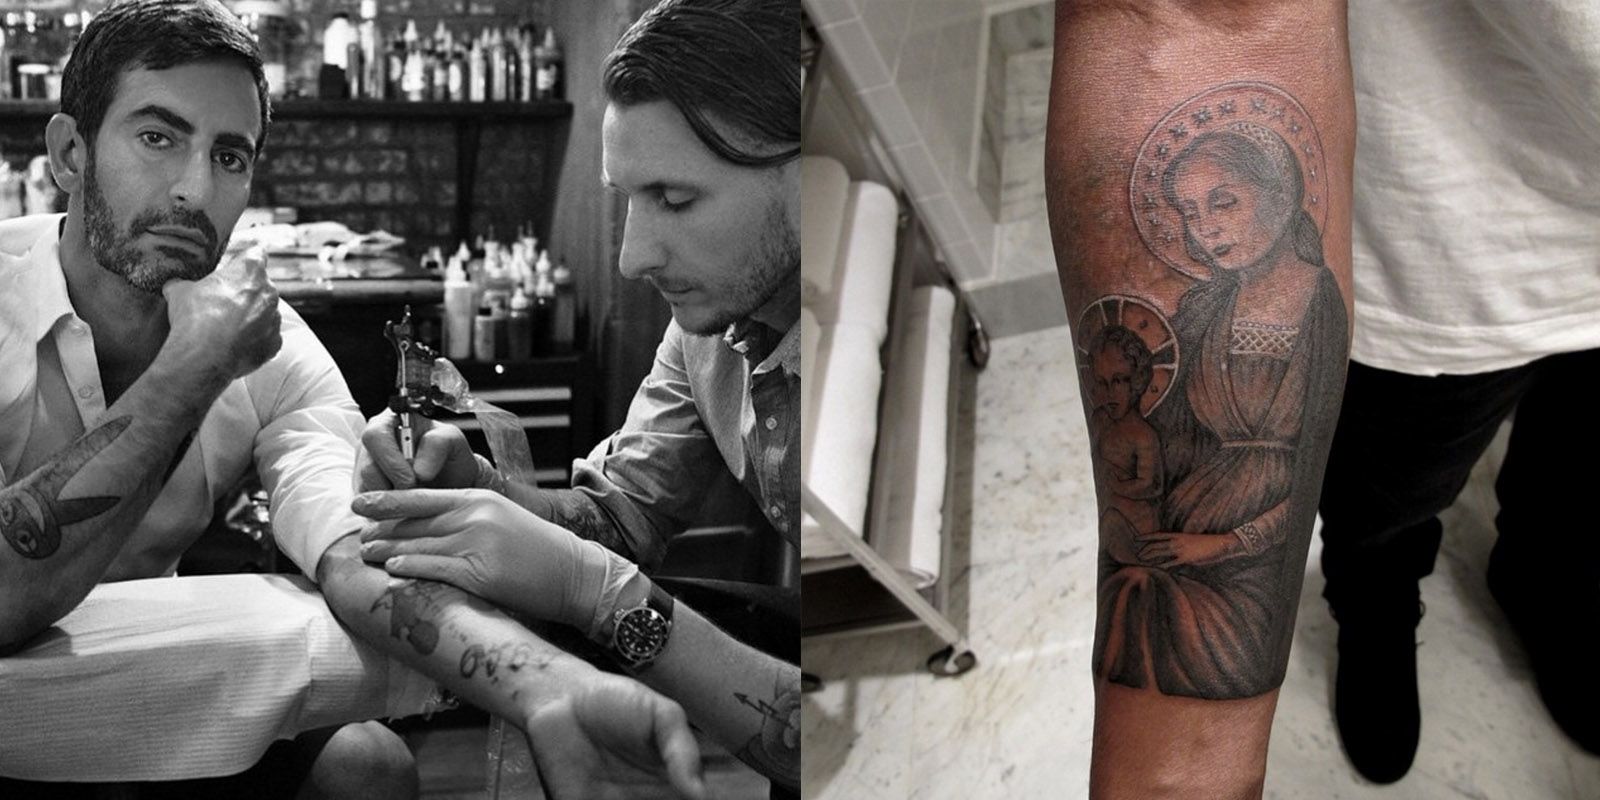 19 Best Tattoo Artists on Instagram - Instagram Tattoo Artists To ...